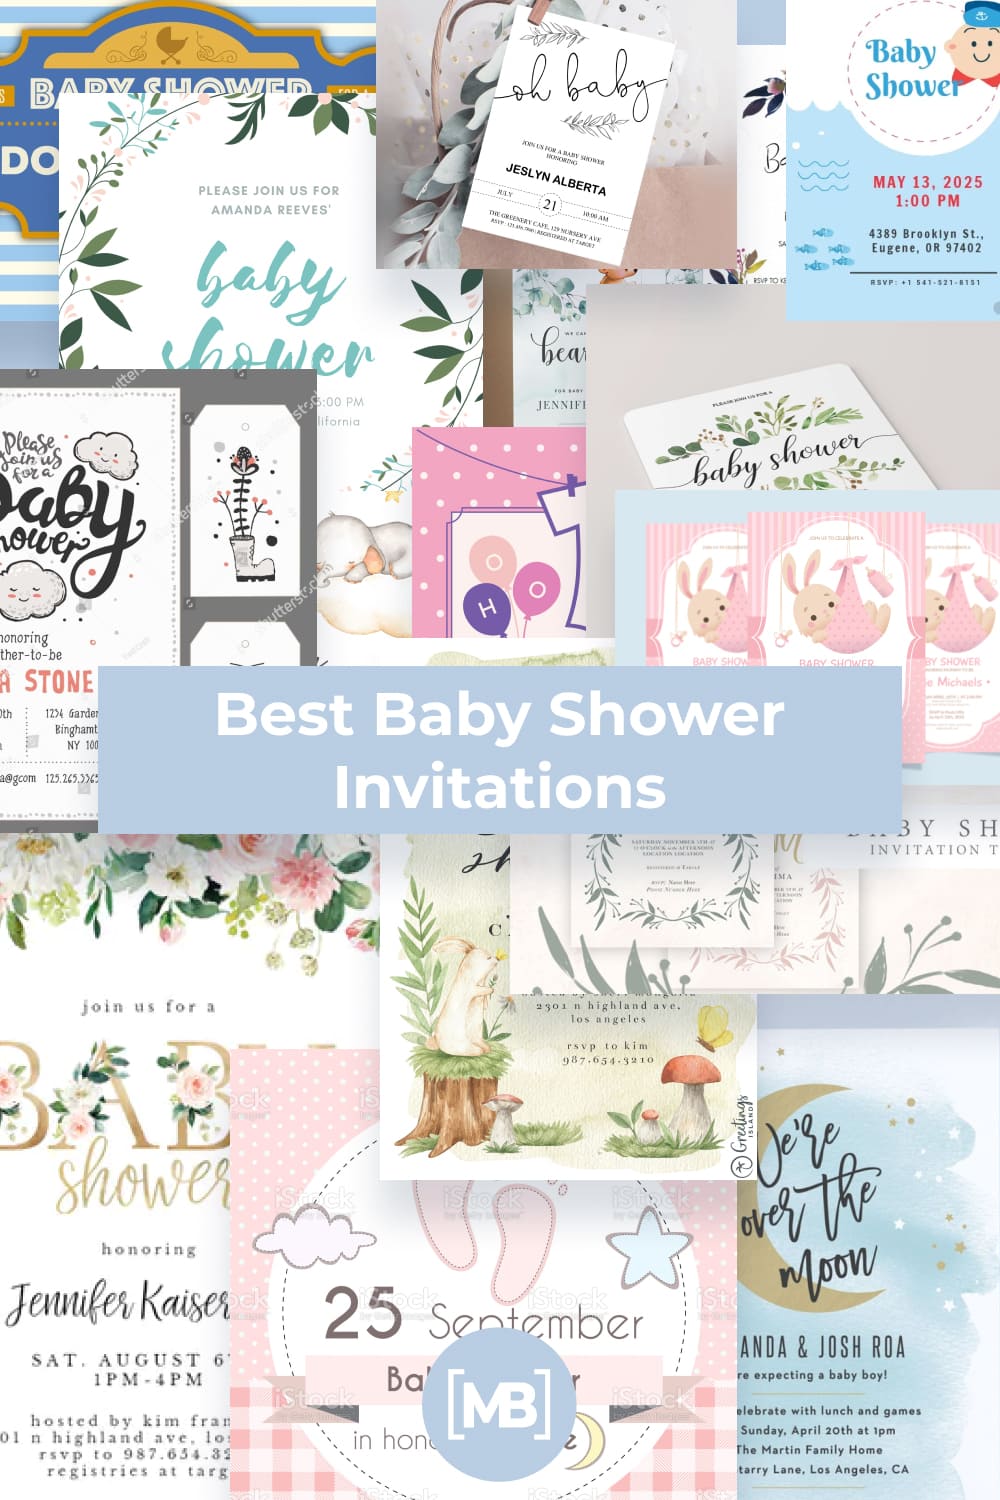 Baby Shower Invitations Pinterest.